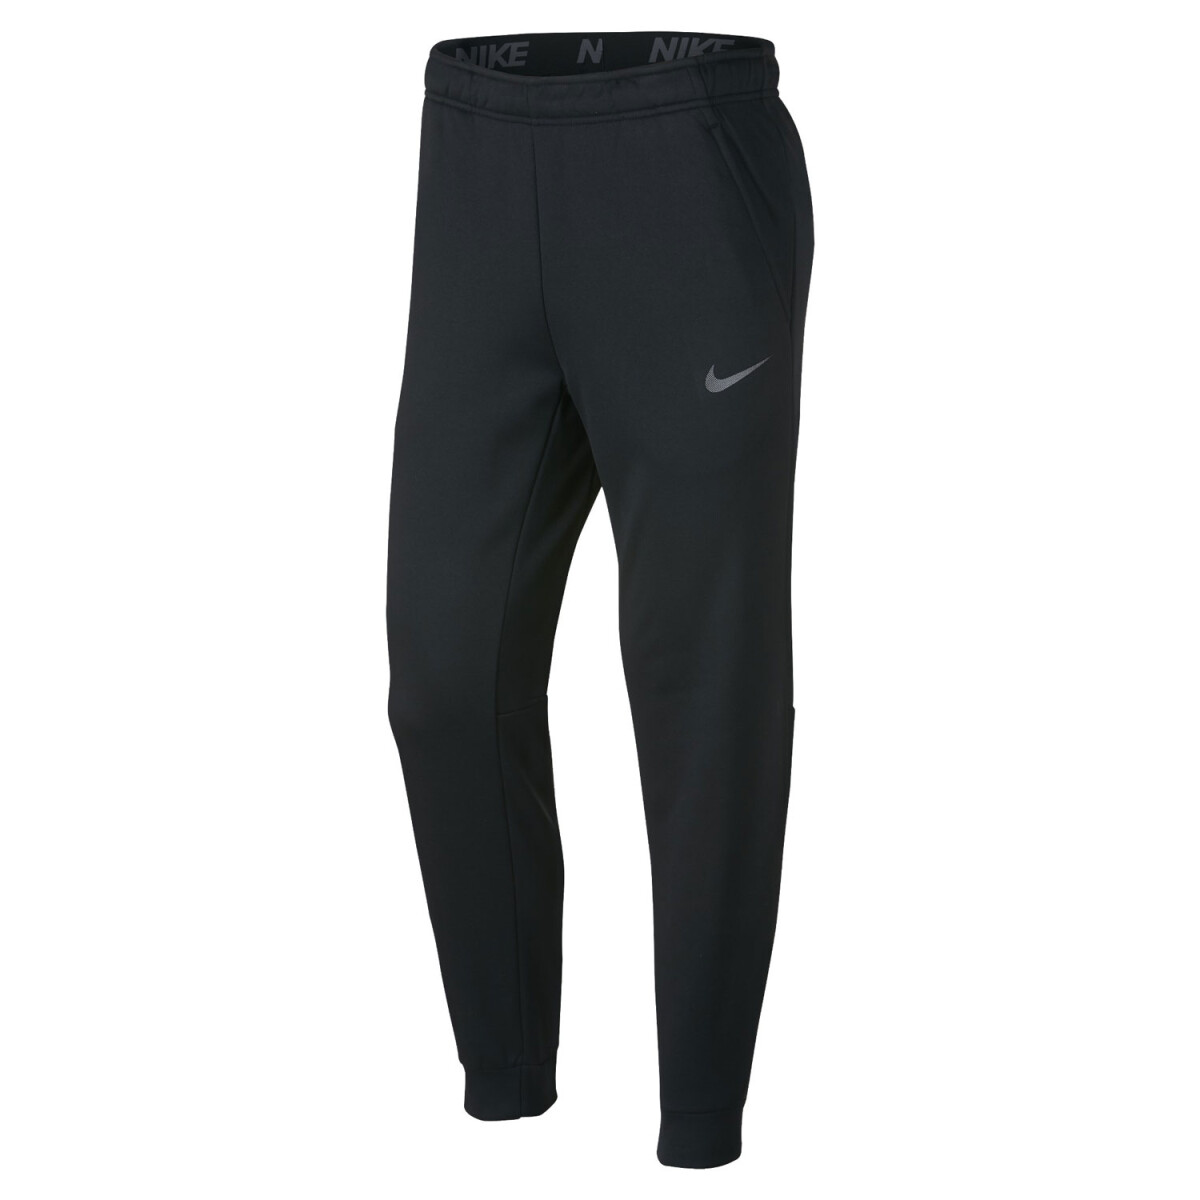 Pantalon Nike Training Hombre Thrma Taper - Color Único 